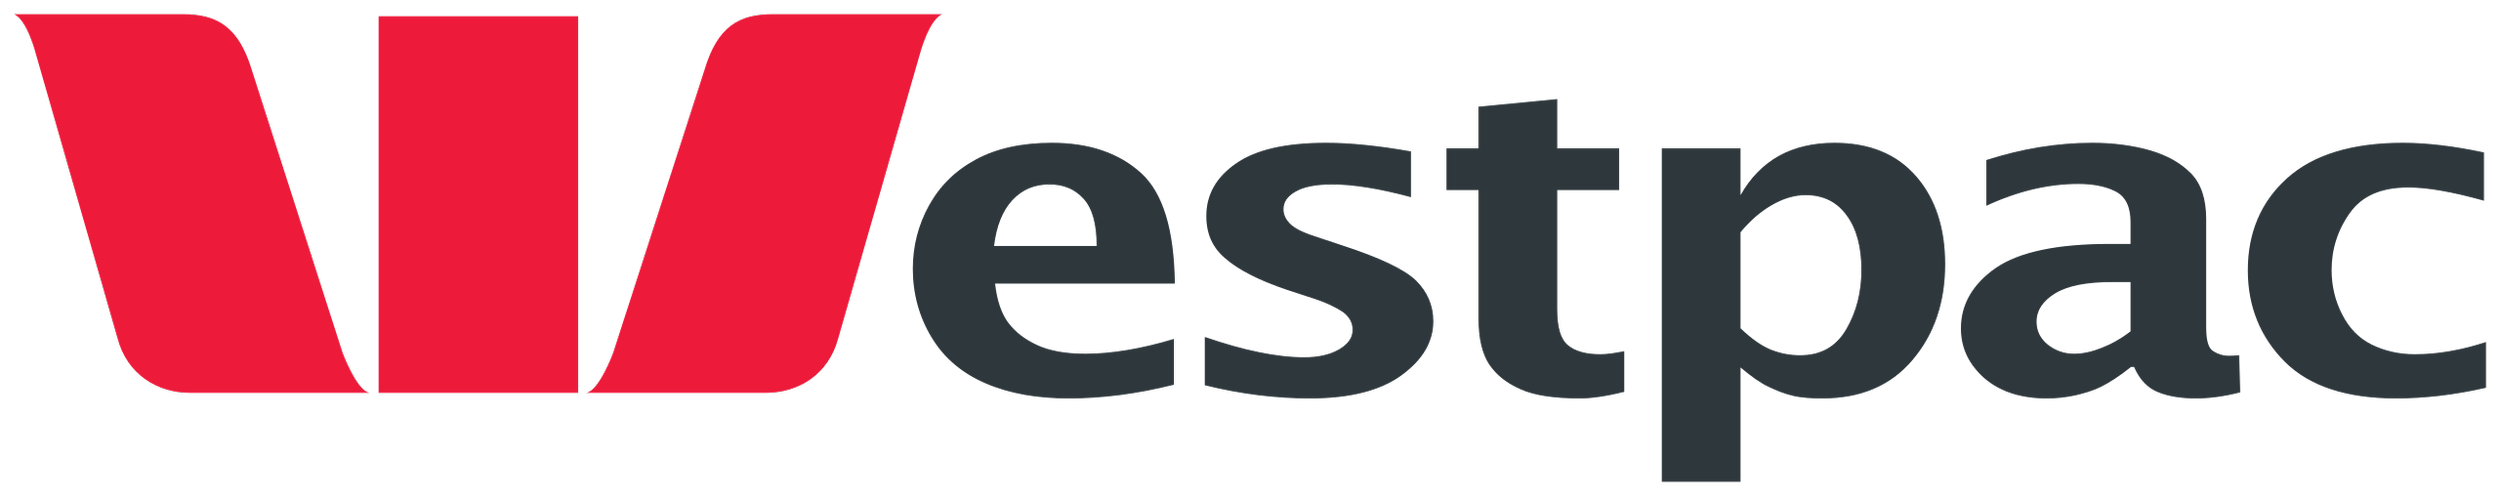 Westpac_logo.svg.png